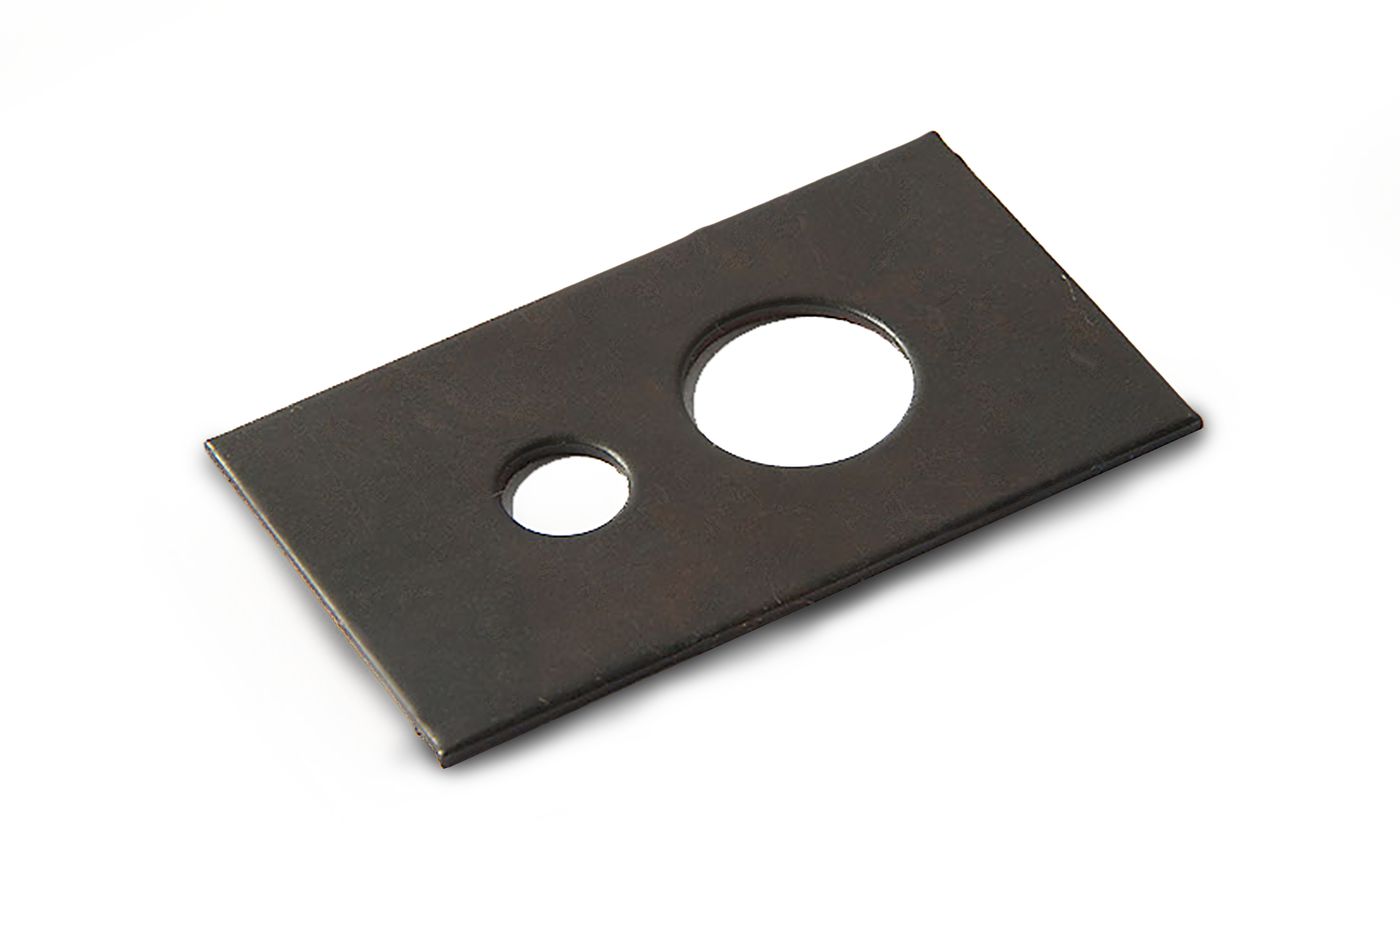 Einstellplatte
Adjusting plate
Plaque de réglage
Placa de ajust